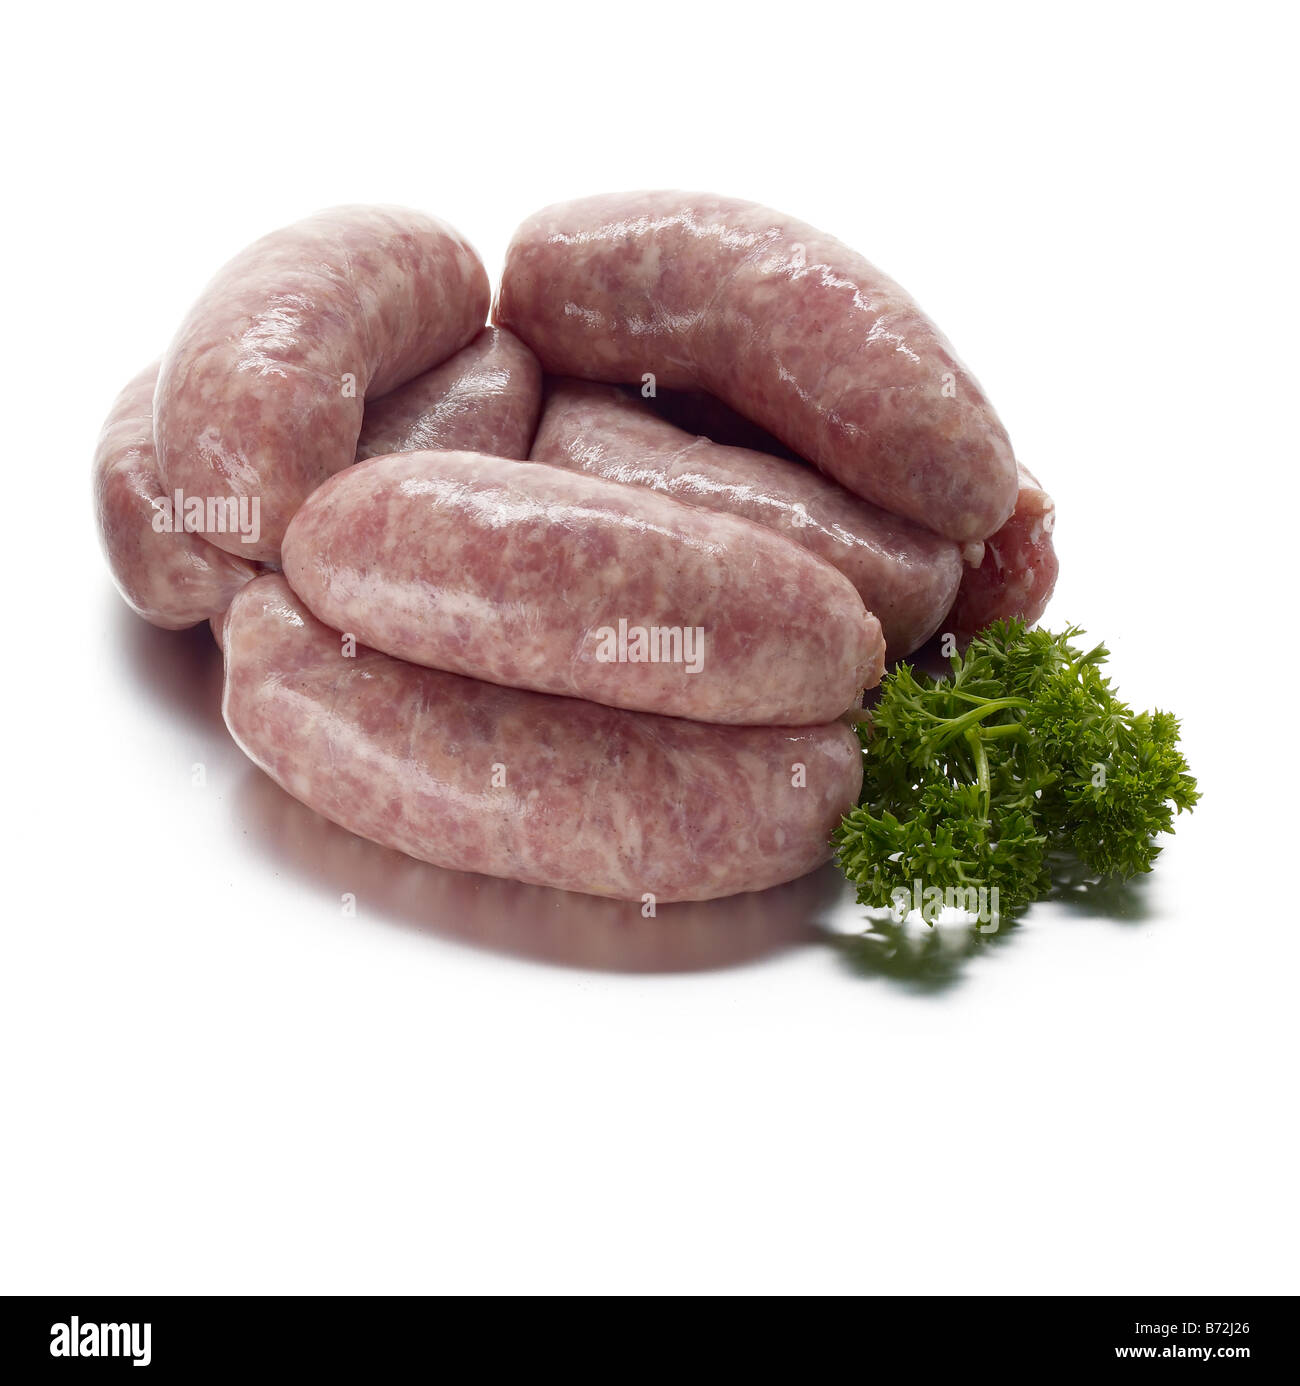 raw pork sausages Stock Photo